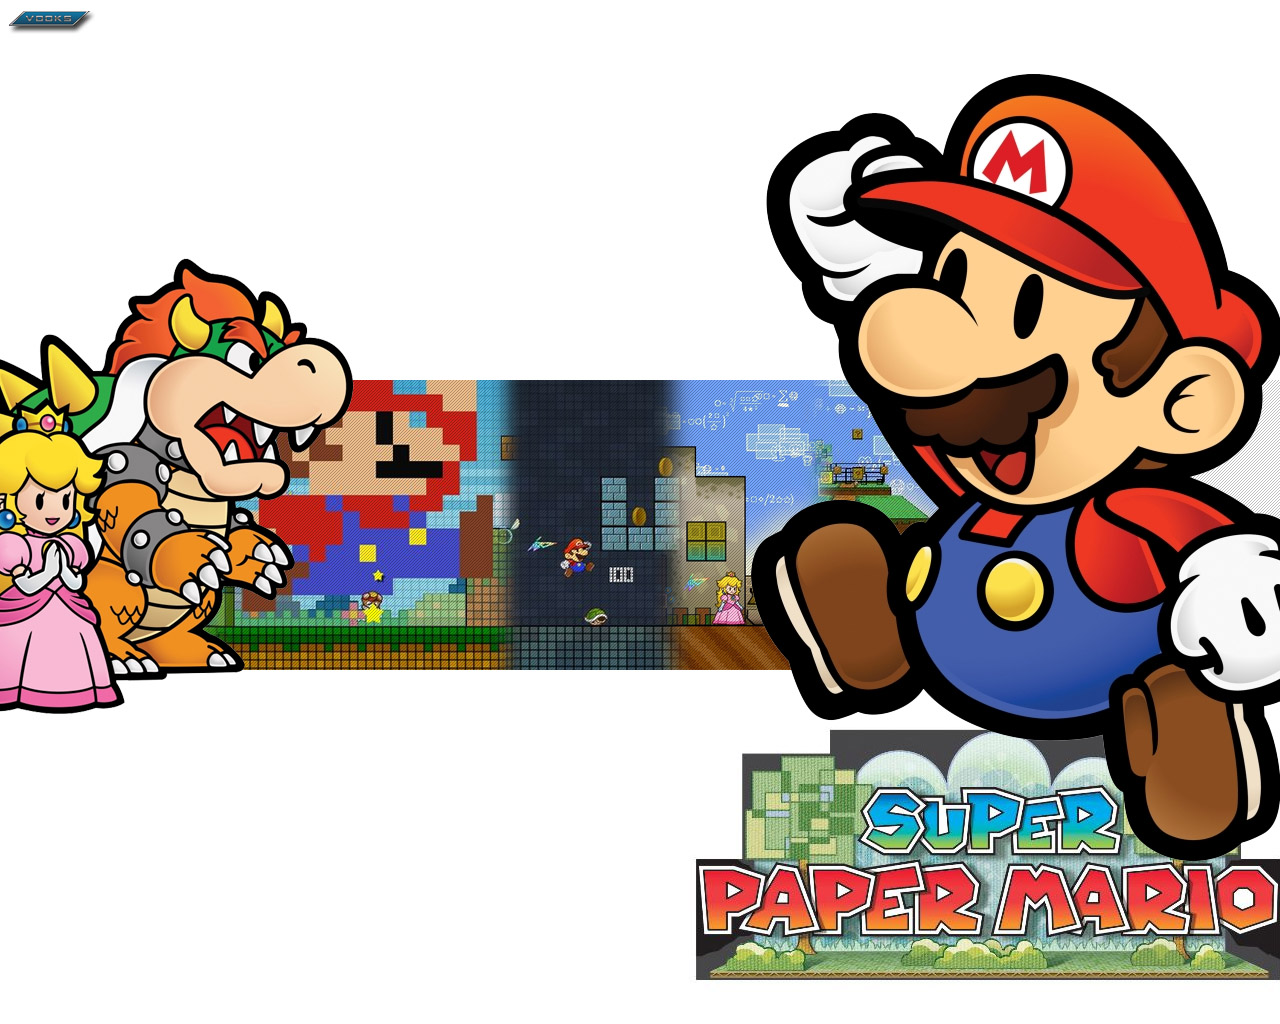 [50+] Super Paper Mario Wallpaper | WallpaperSafari.com